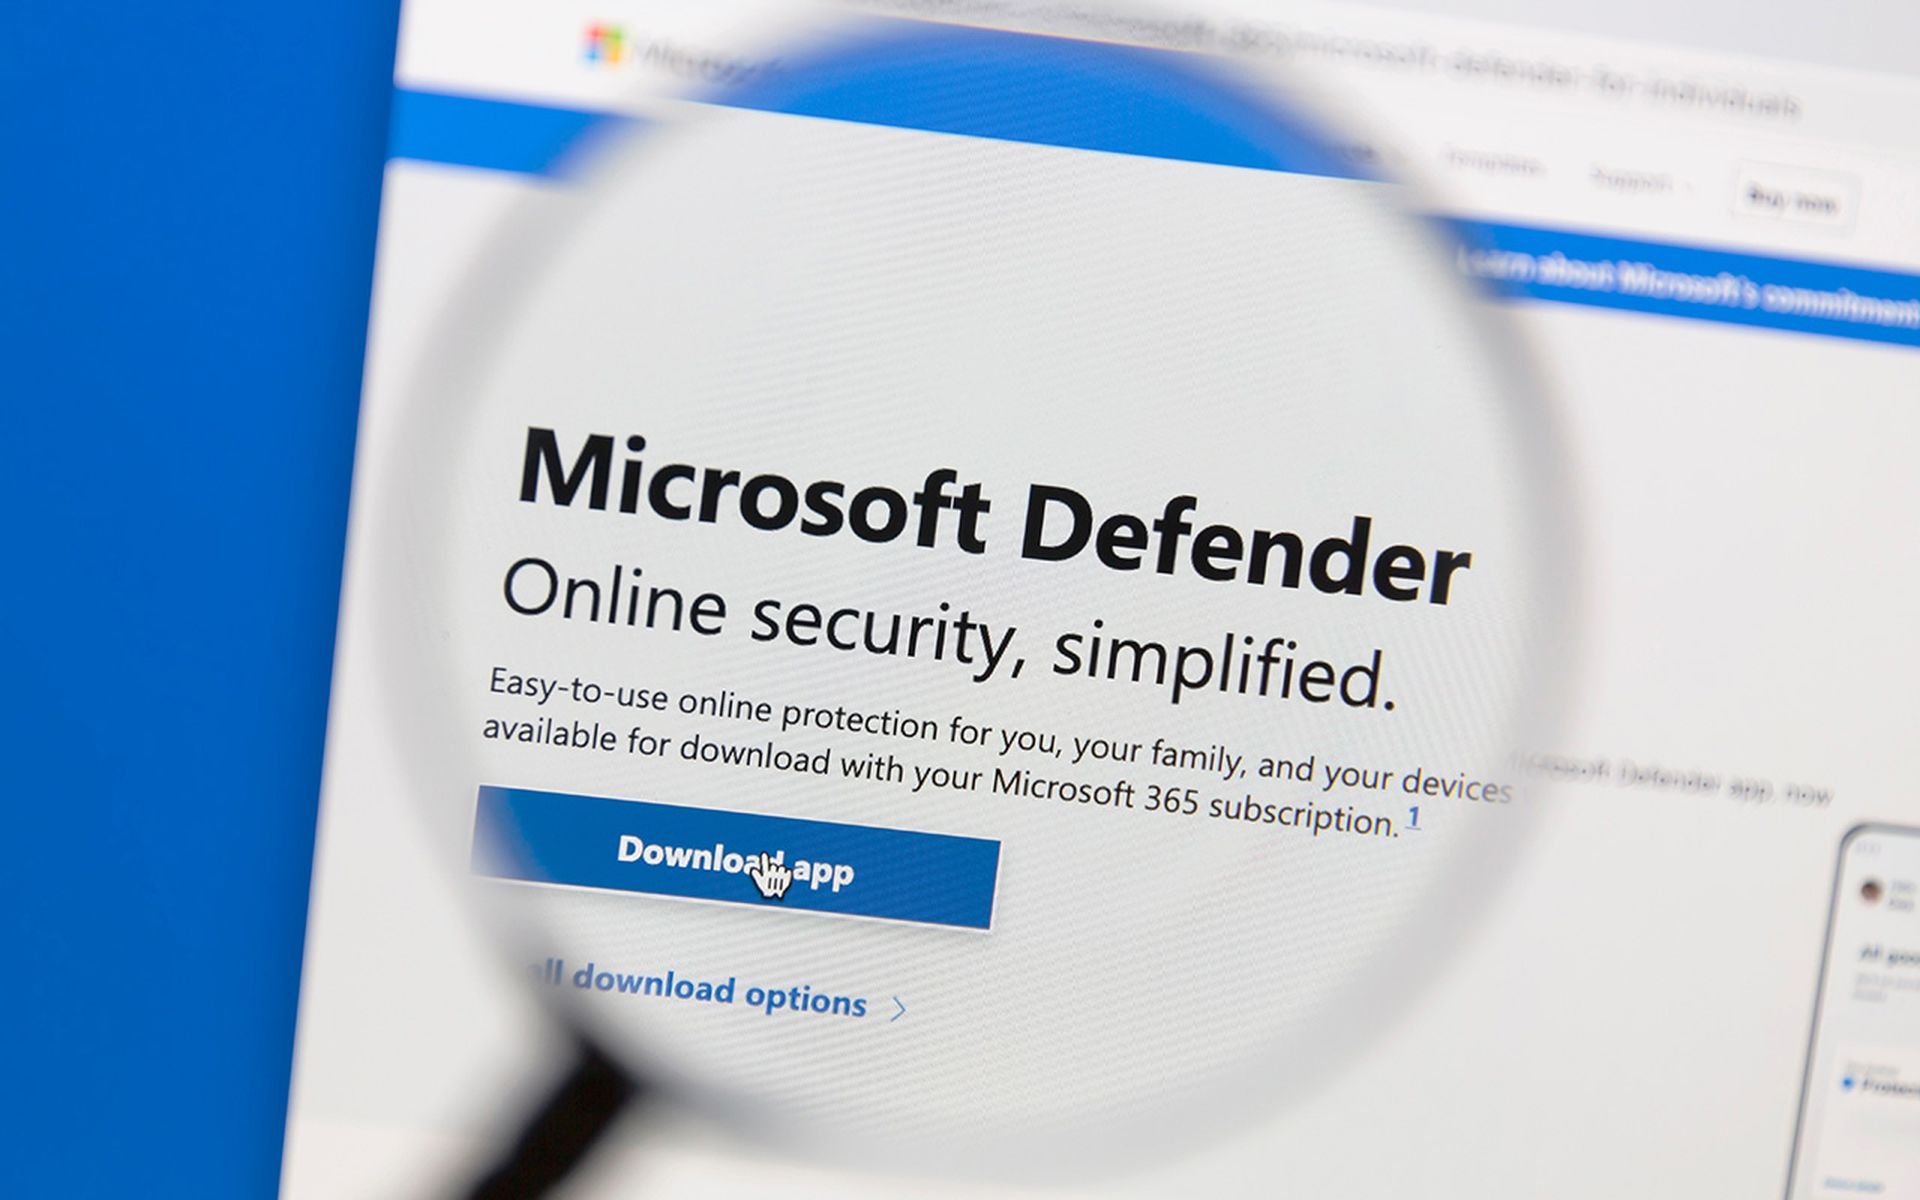 Microsoft Defender website.